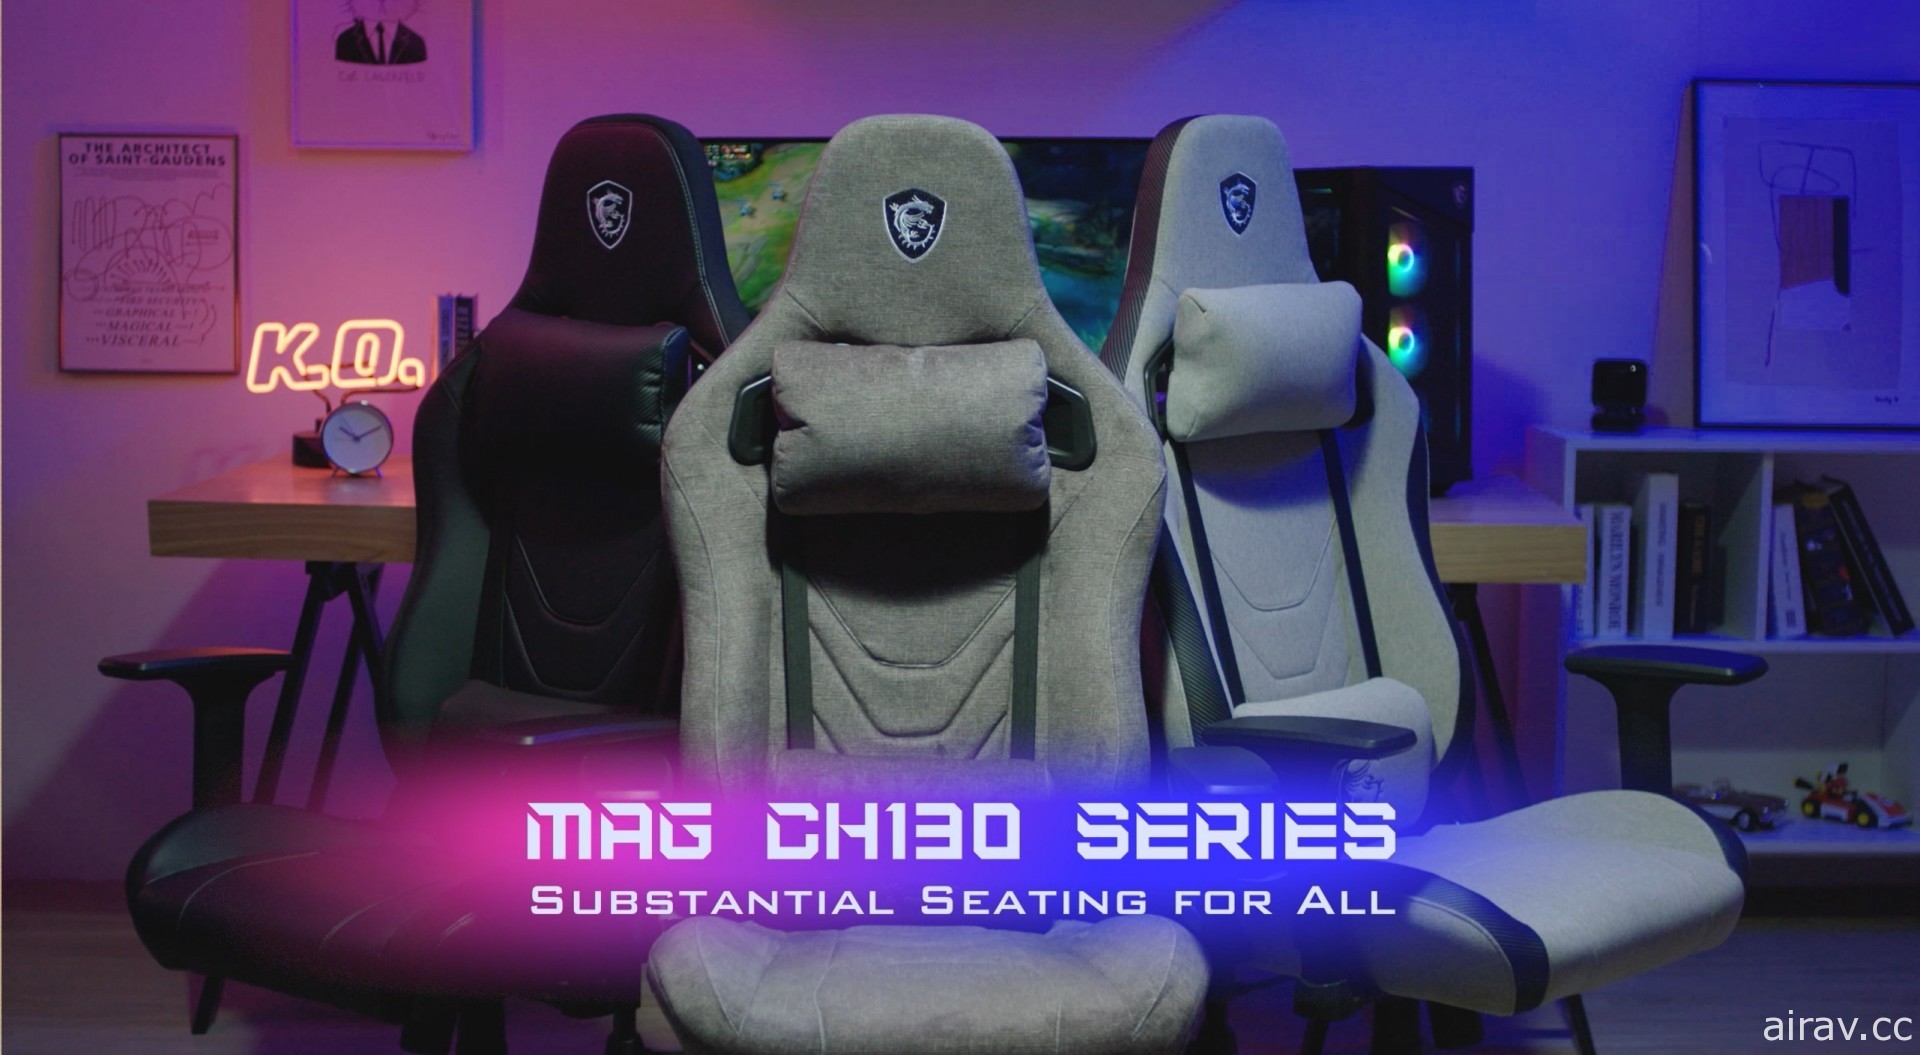 MSI 推出 MAG CH130 I 系列防水耐刮系列電競椅